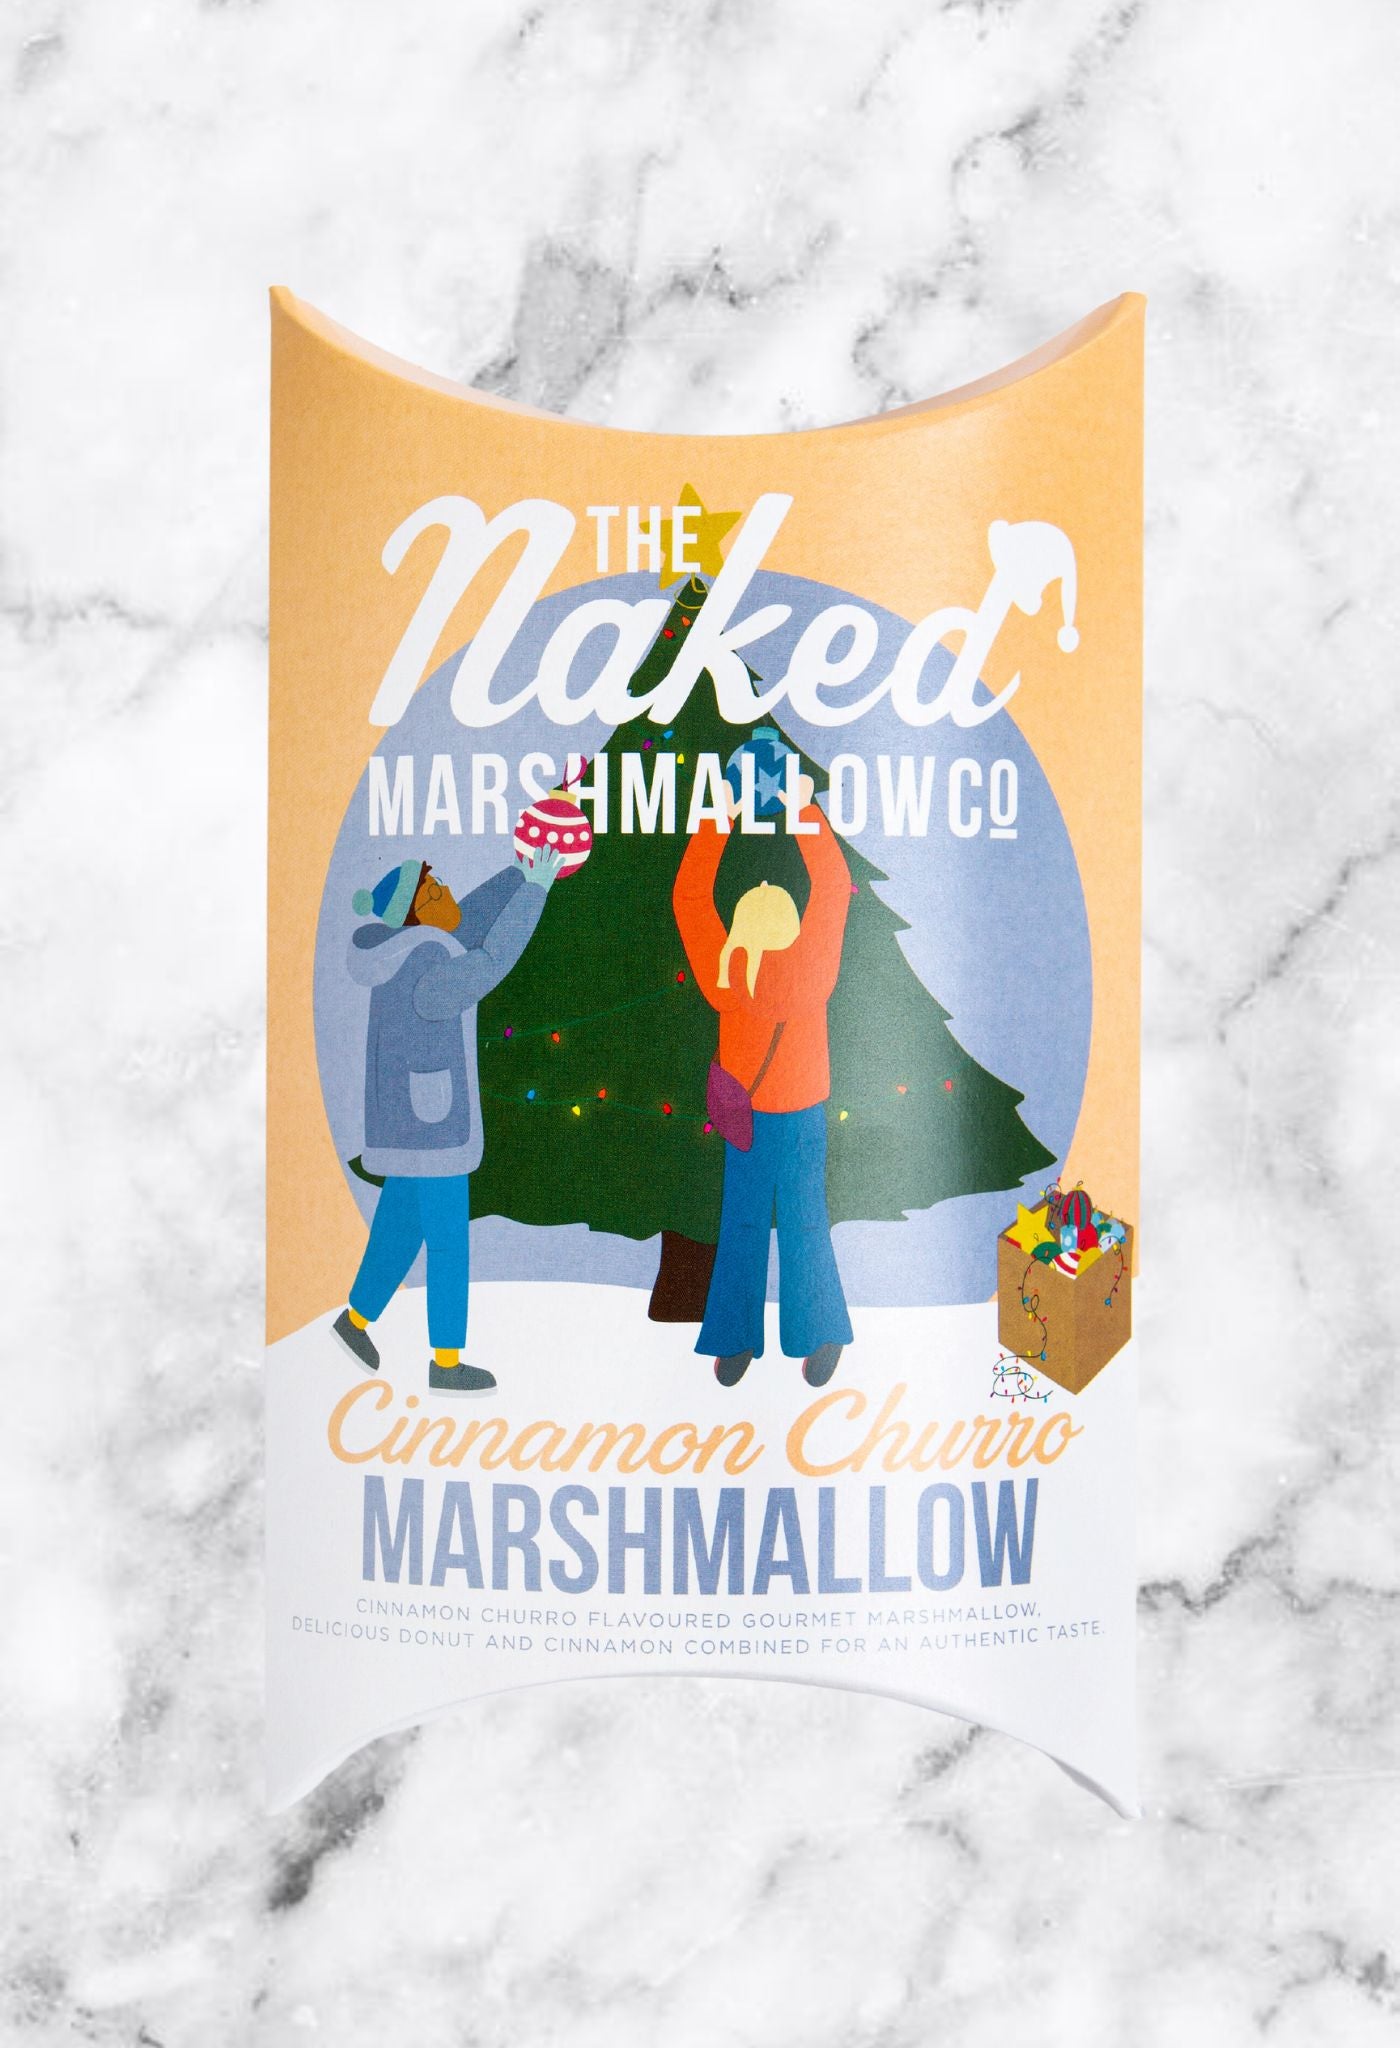 Cinnamon Churro Festive Gourmet Marshmallows